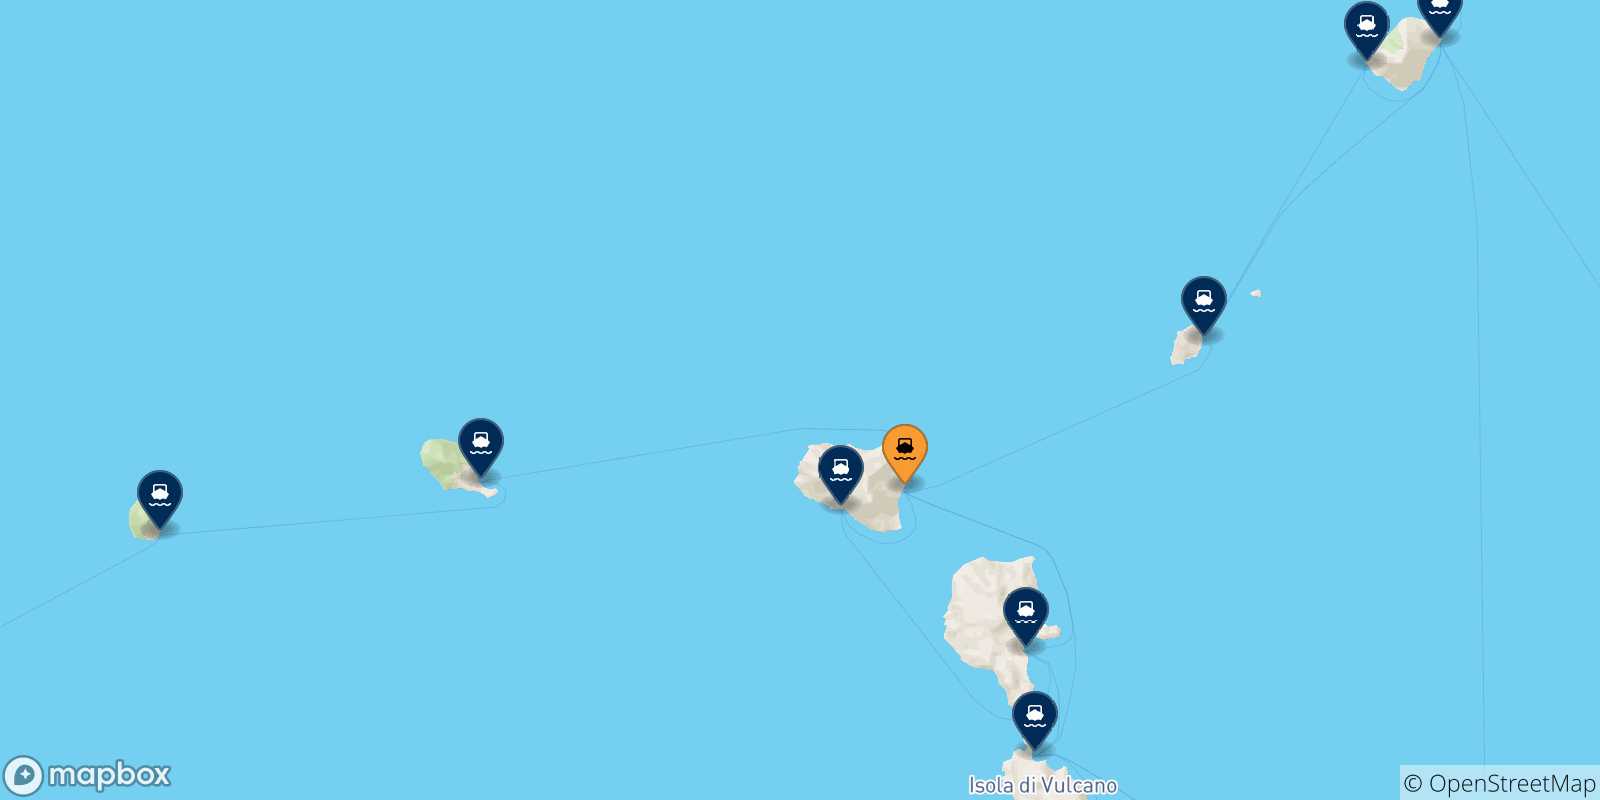 Mappa delle possibili rotte tra Santa Marina (Salina) e le Isole Eolie